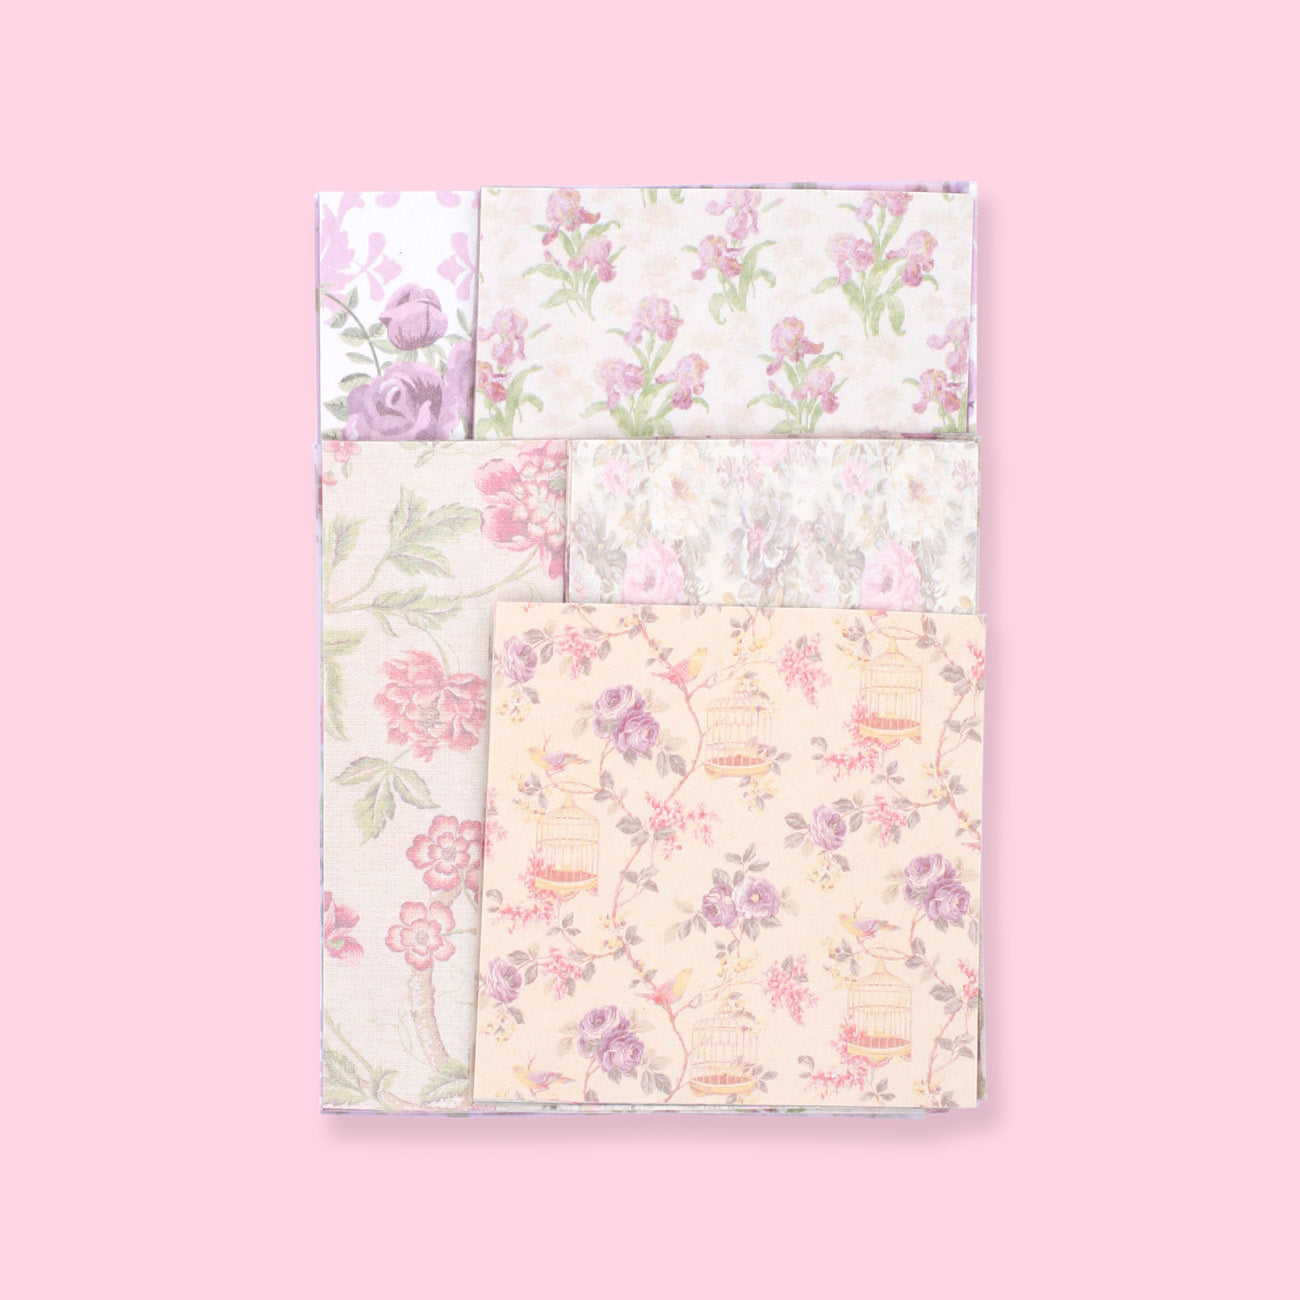 Pink Scrapbook Paper: 20 Pink Patterns Scrapbooking Paper, Craft Paper Pad